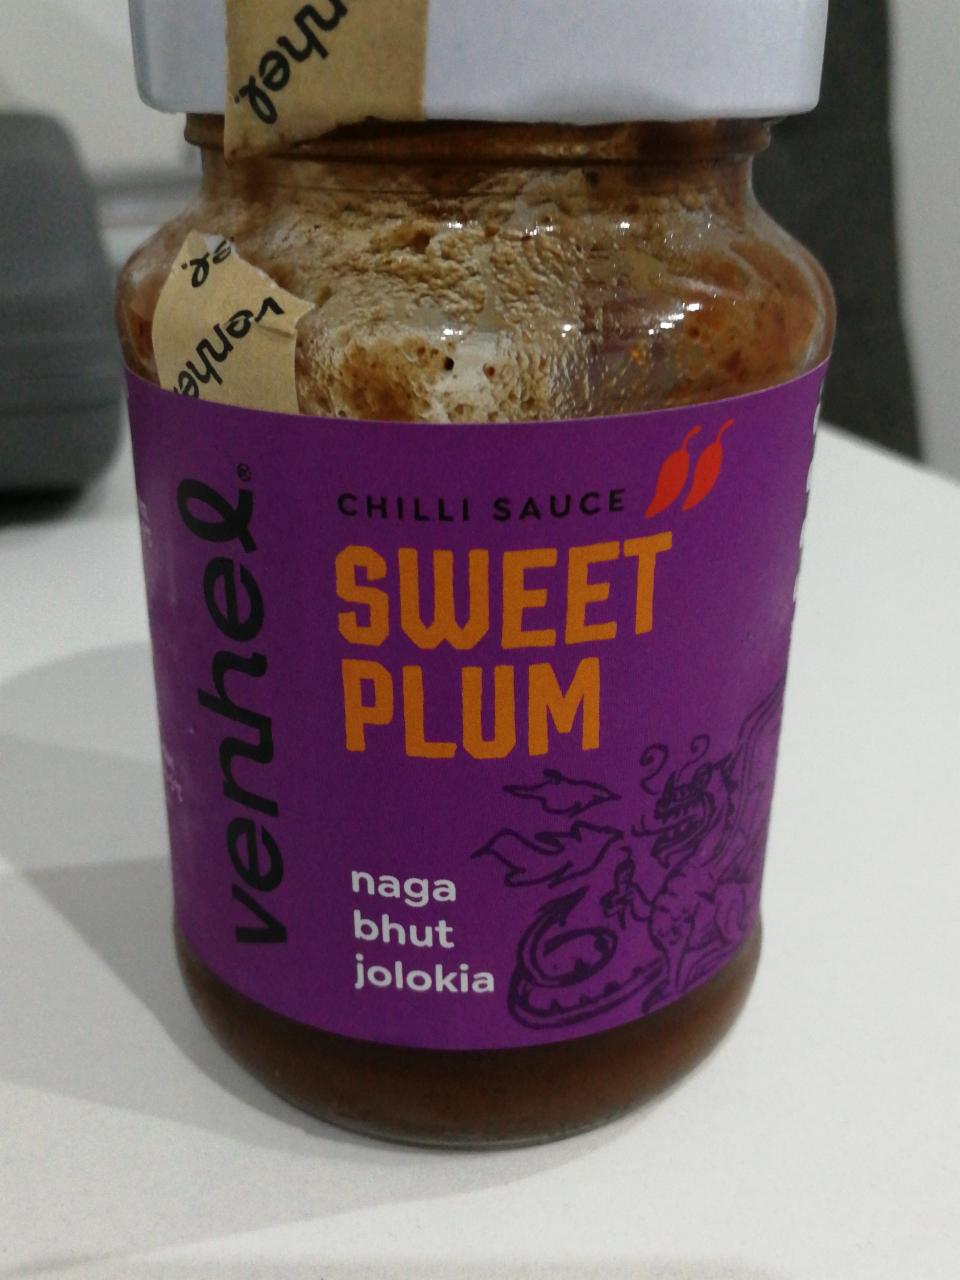 Fotografie - Venhel chilli sauce Sweet plum